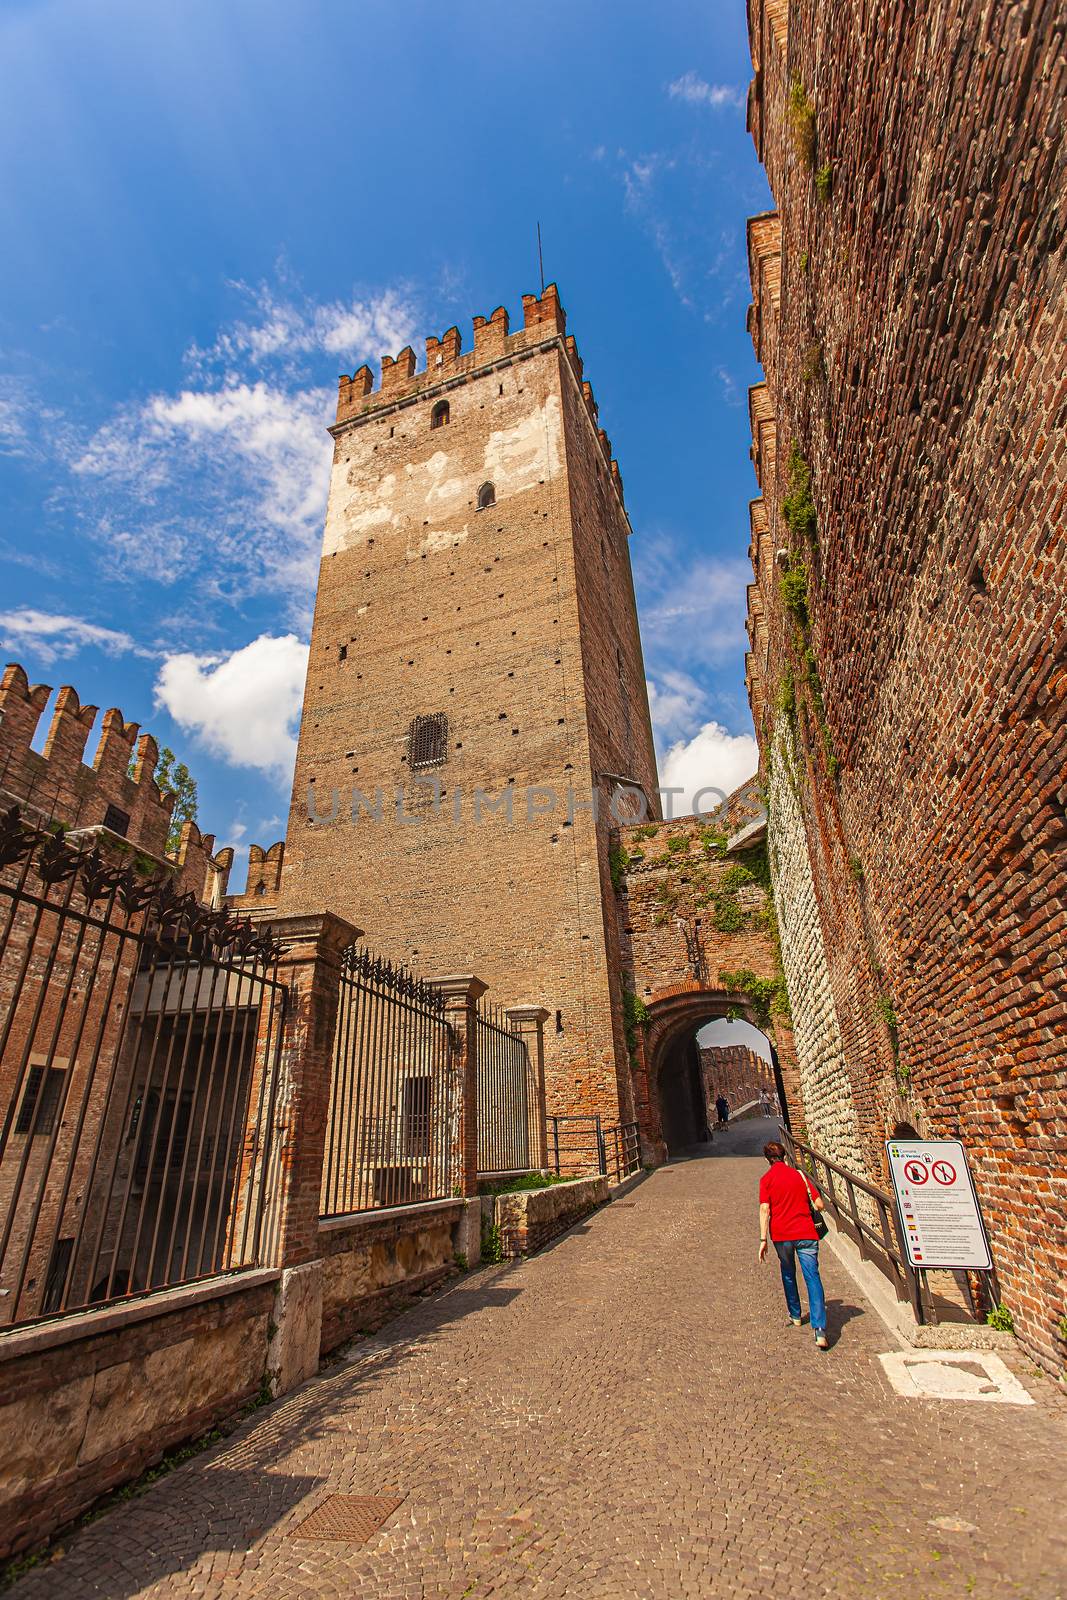 Castelvecchio in Verona, a medieval castle in the center of the Italian city